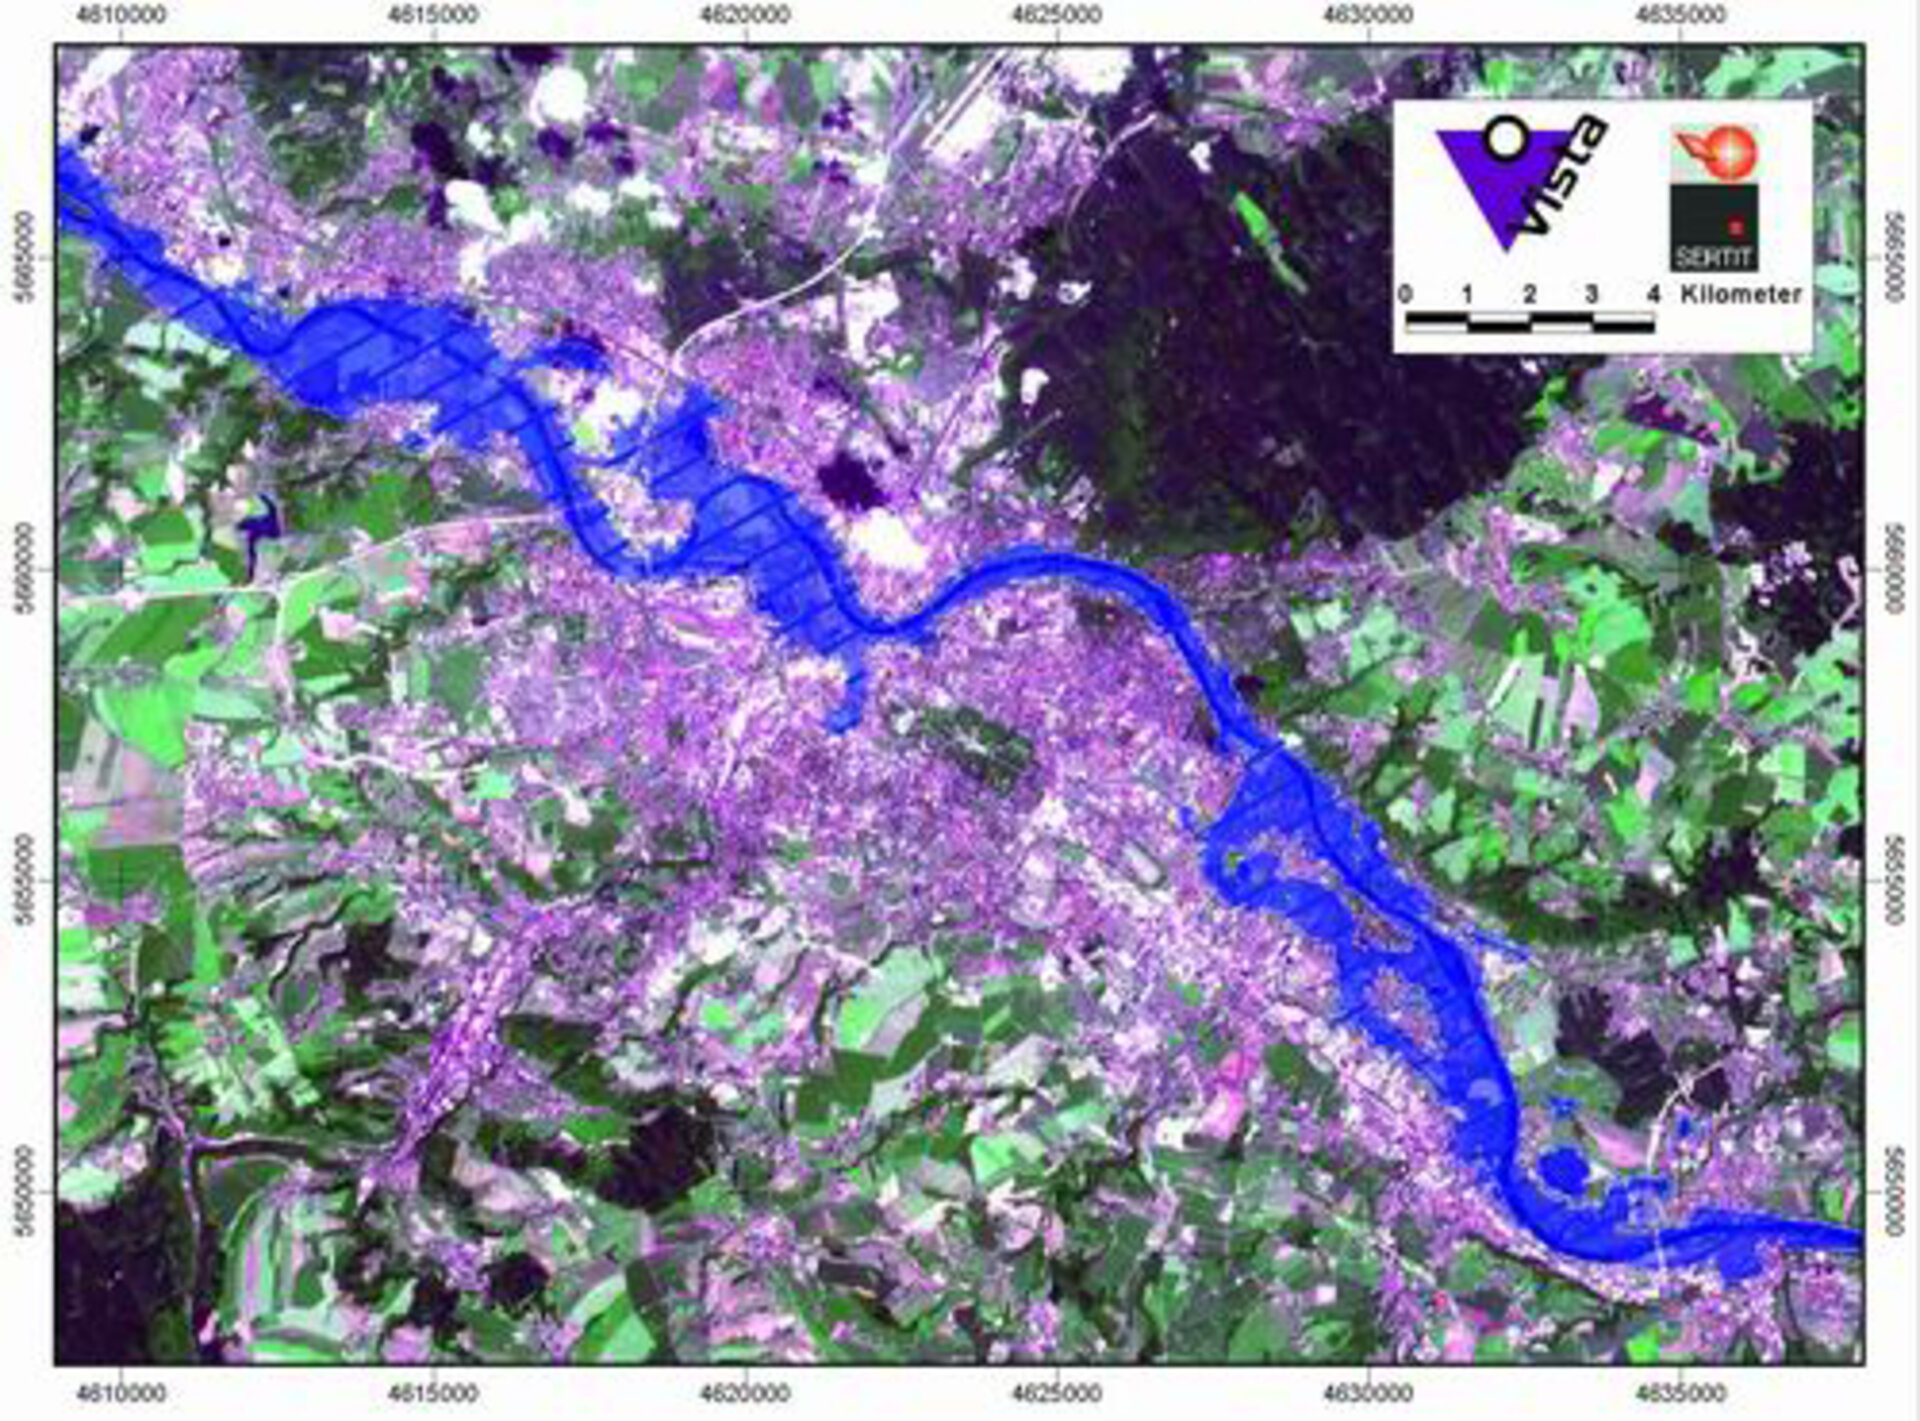 Elbe flood extent mapped via satellite